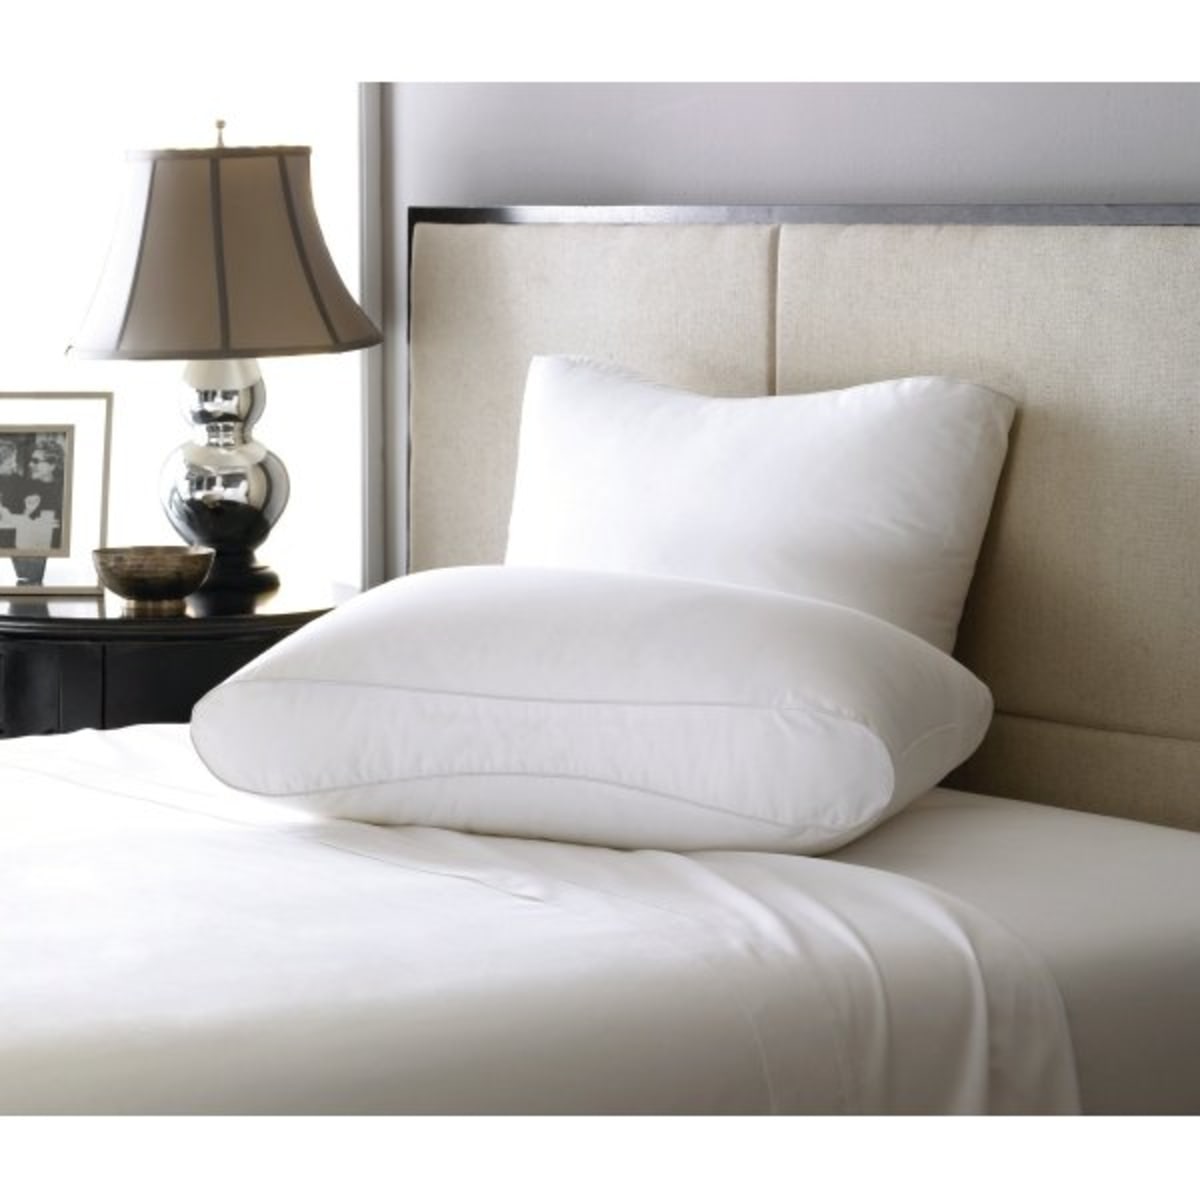 Holiday Inn® Hotel Bedding